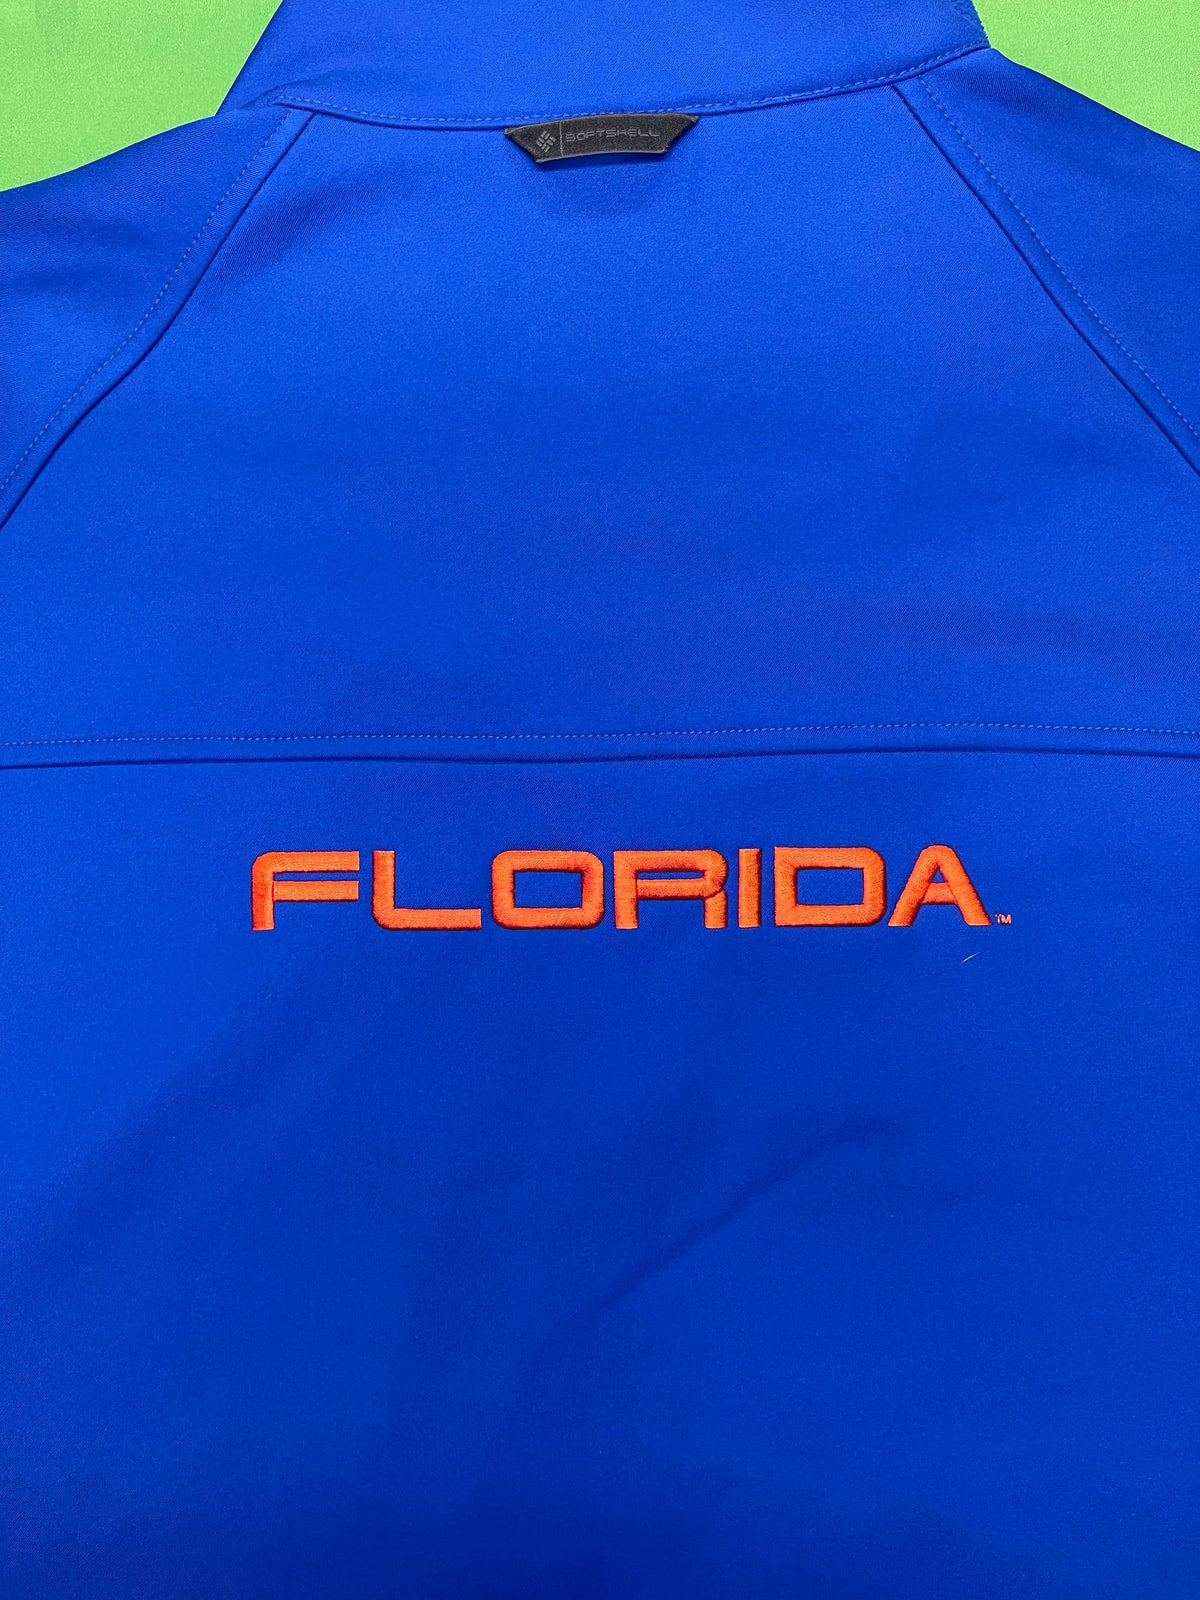 NCAA Florida Gators Blue Full-Zip Jacket Men's 2X-Large